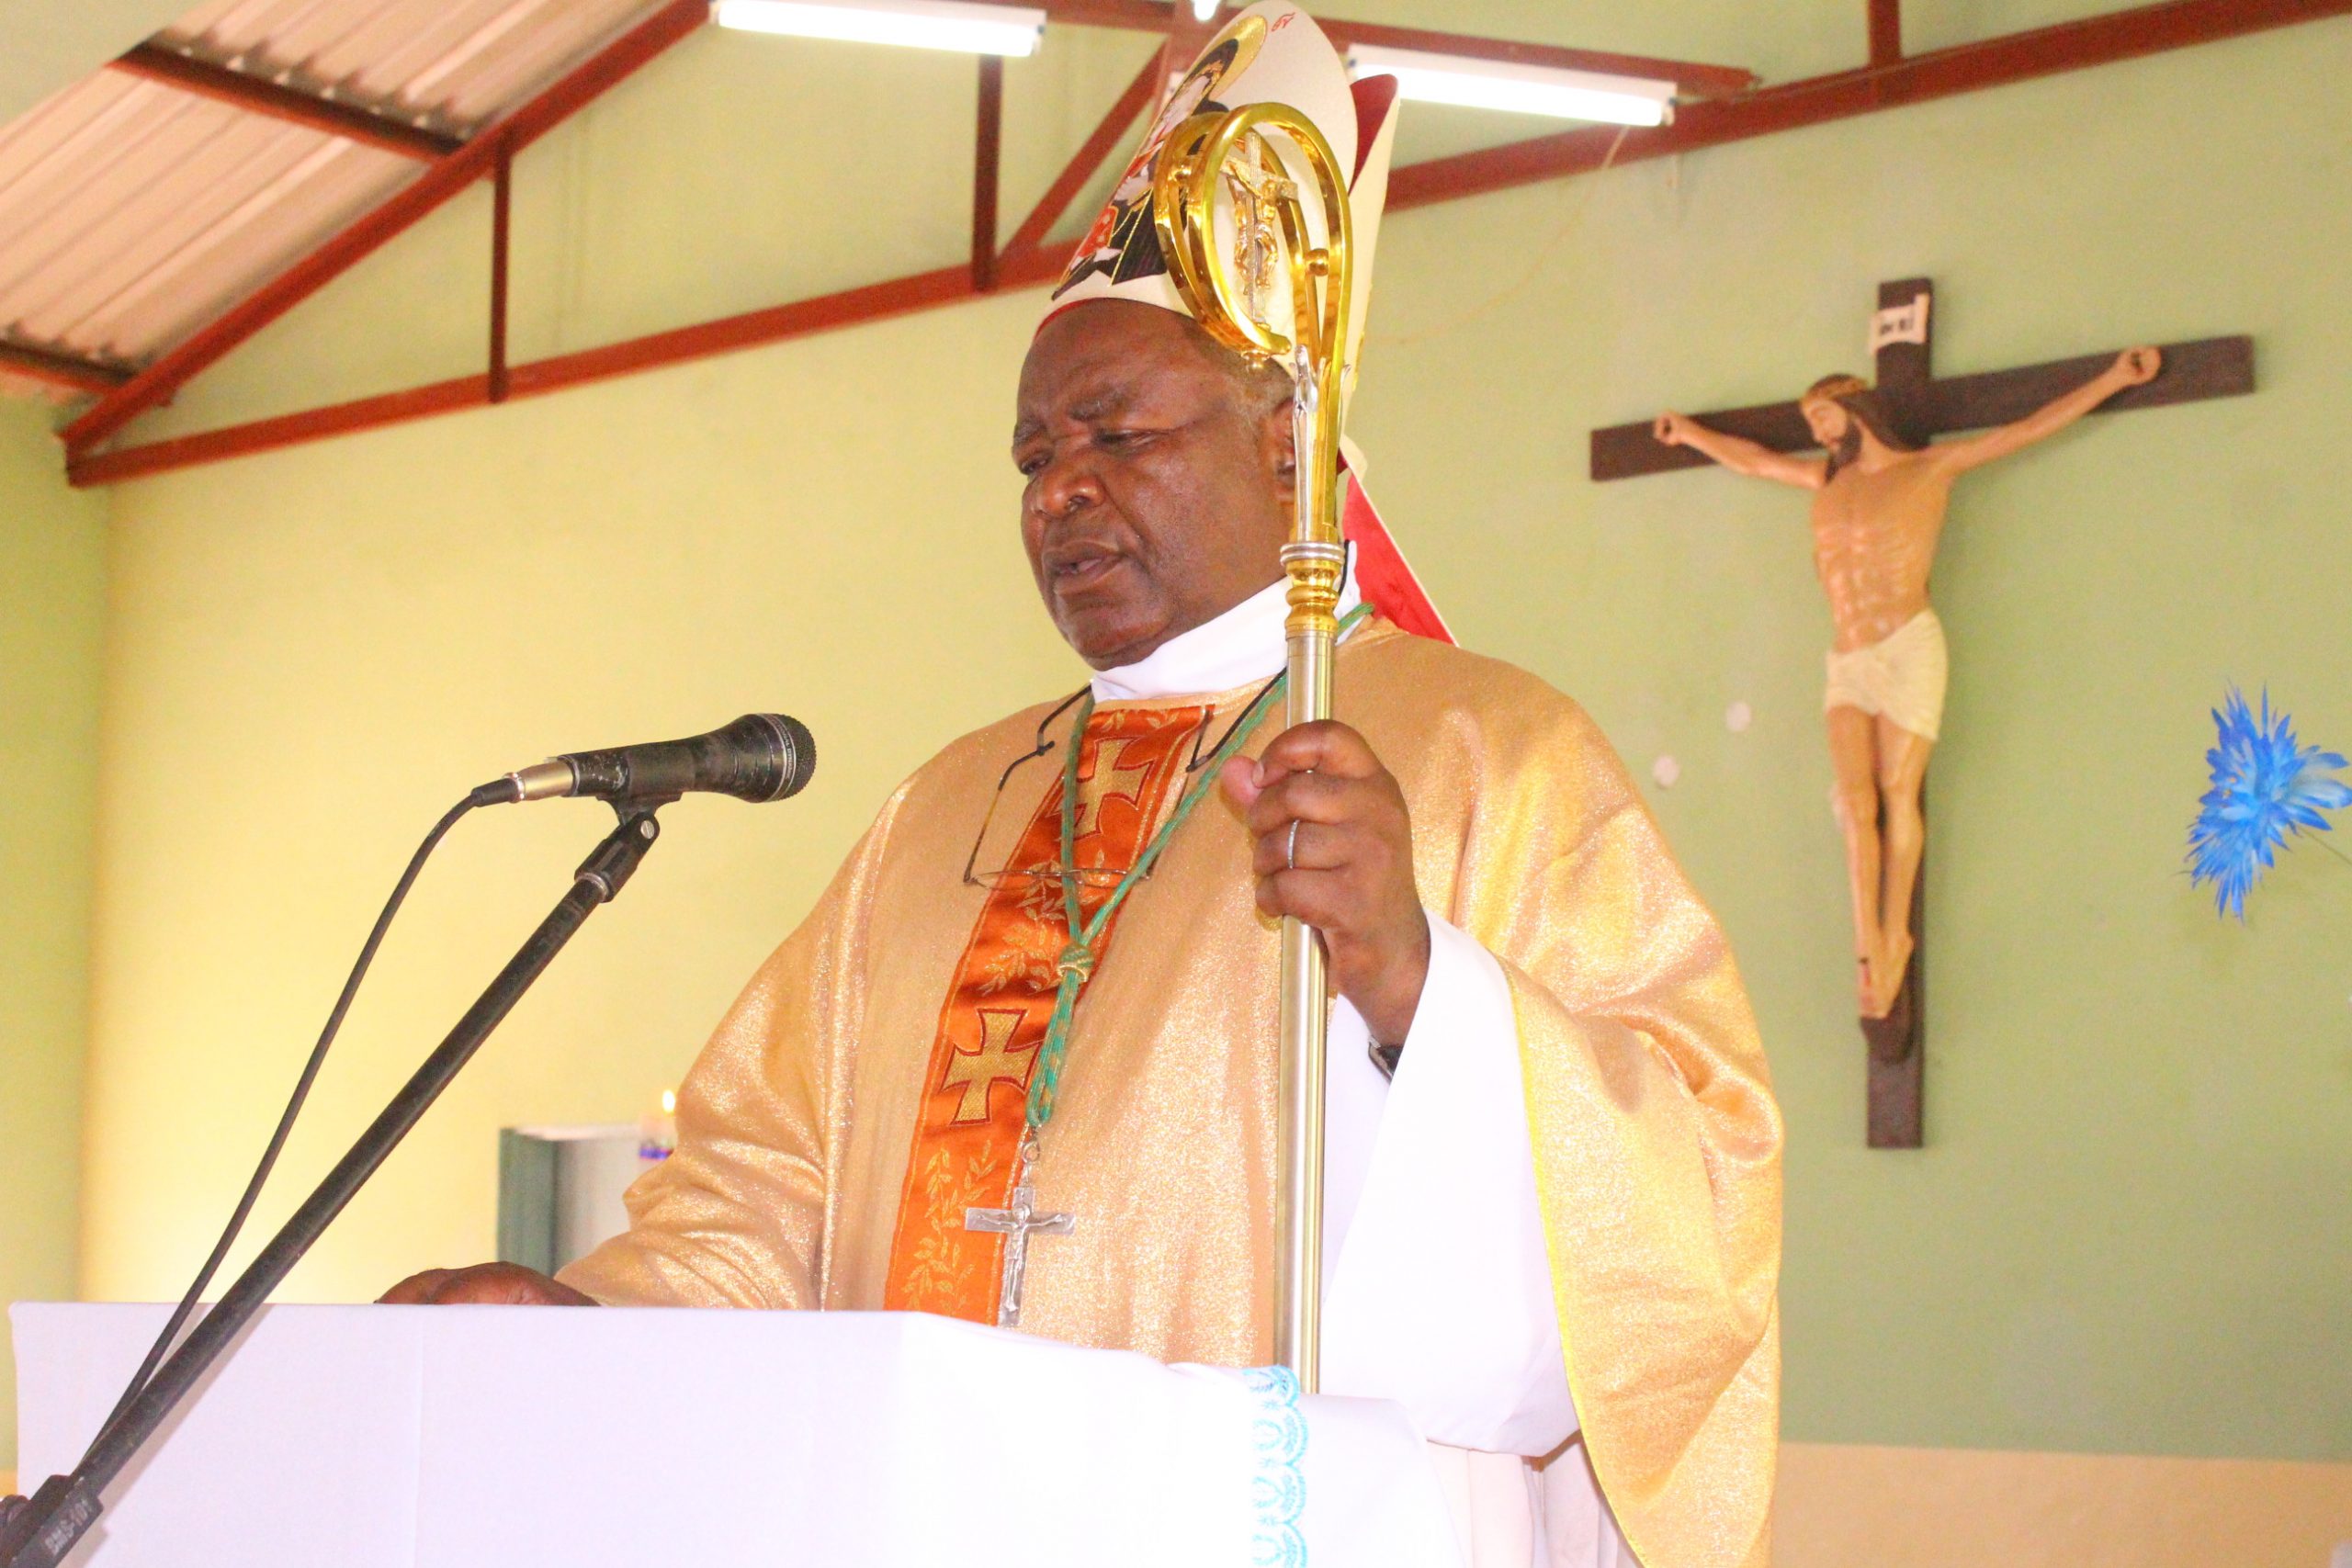 Bishop Mtumbuka hails unity among followers of different religions